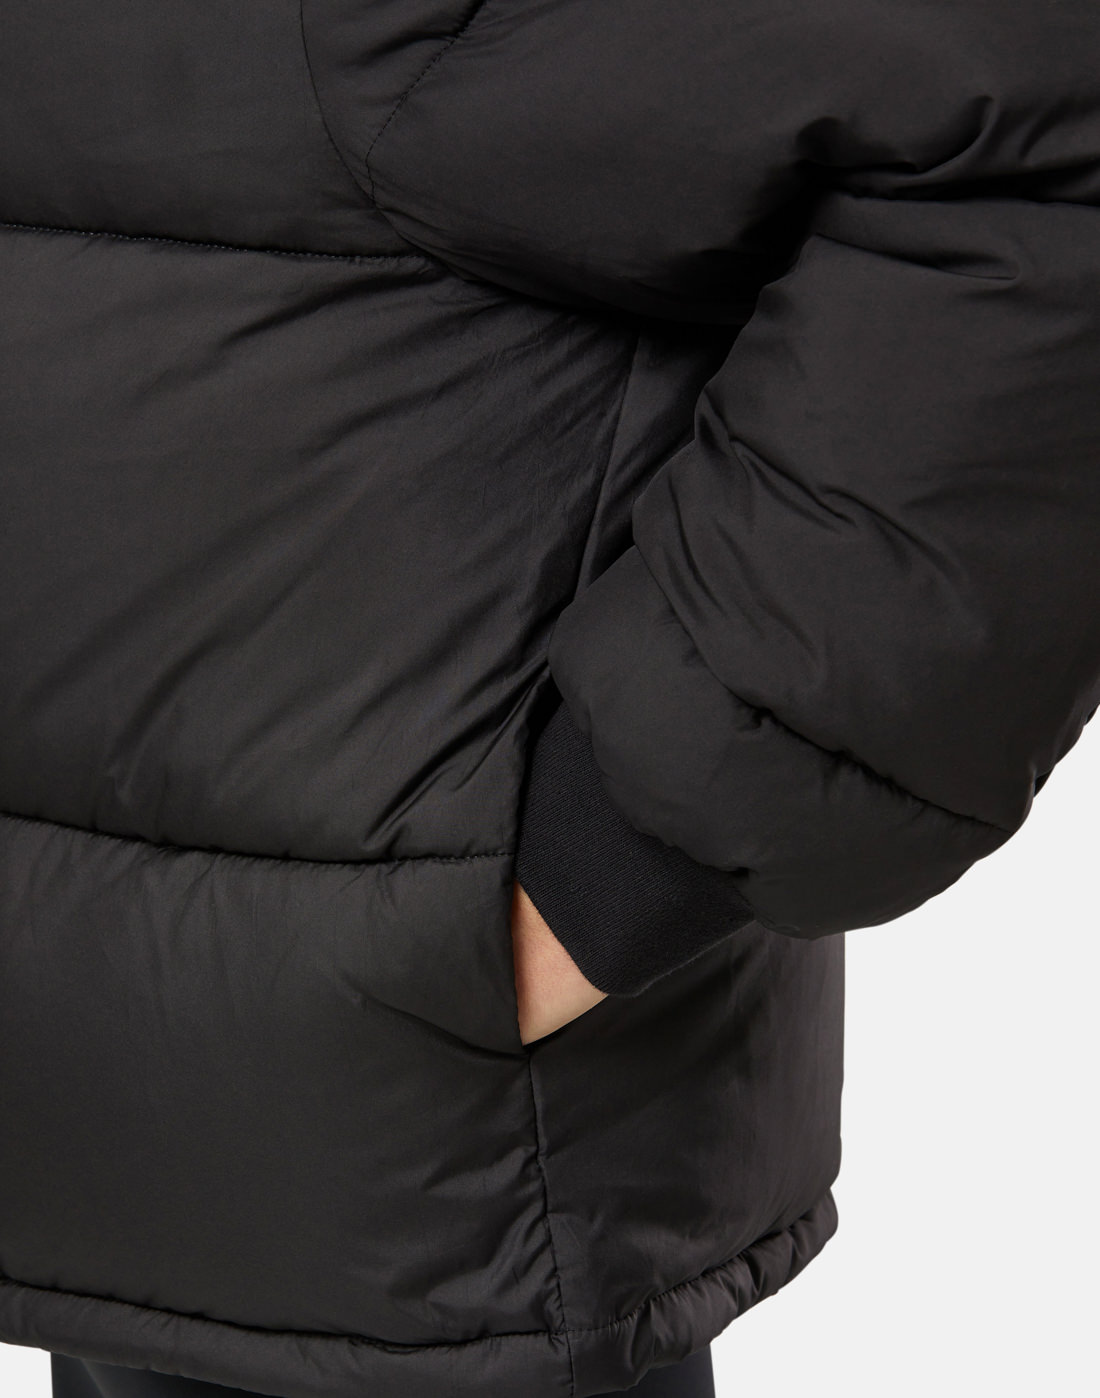 4TH ARQ Womens Hudson Jacket - Black | Life Style Sports UK